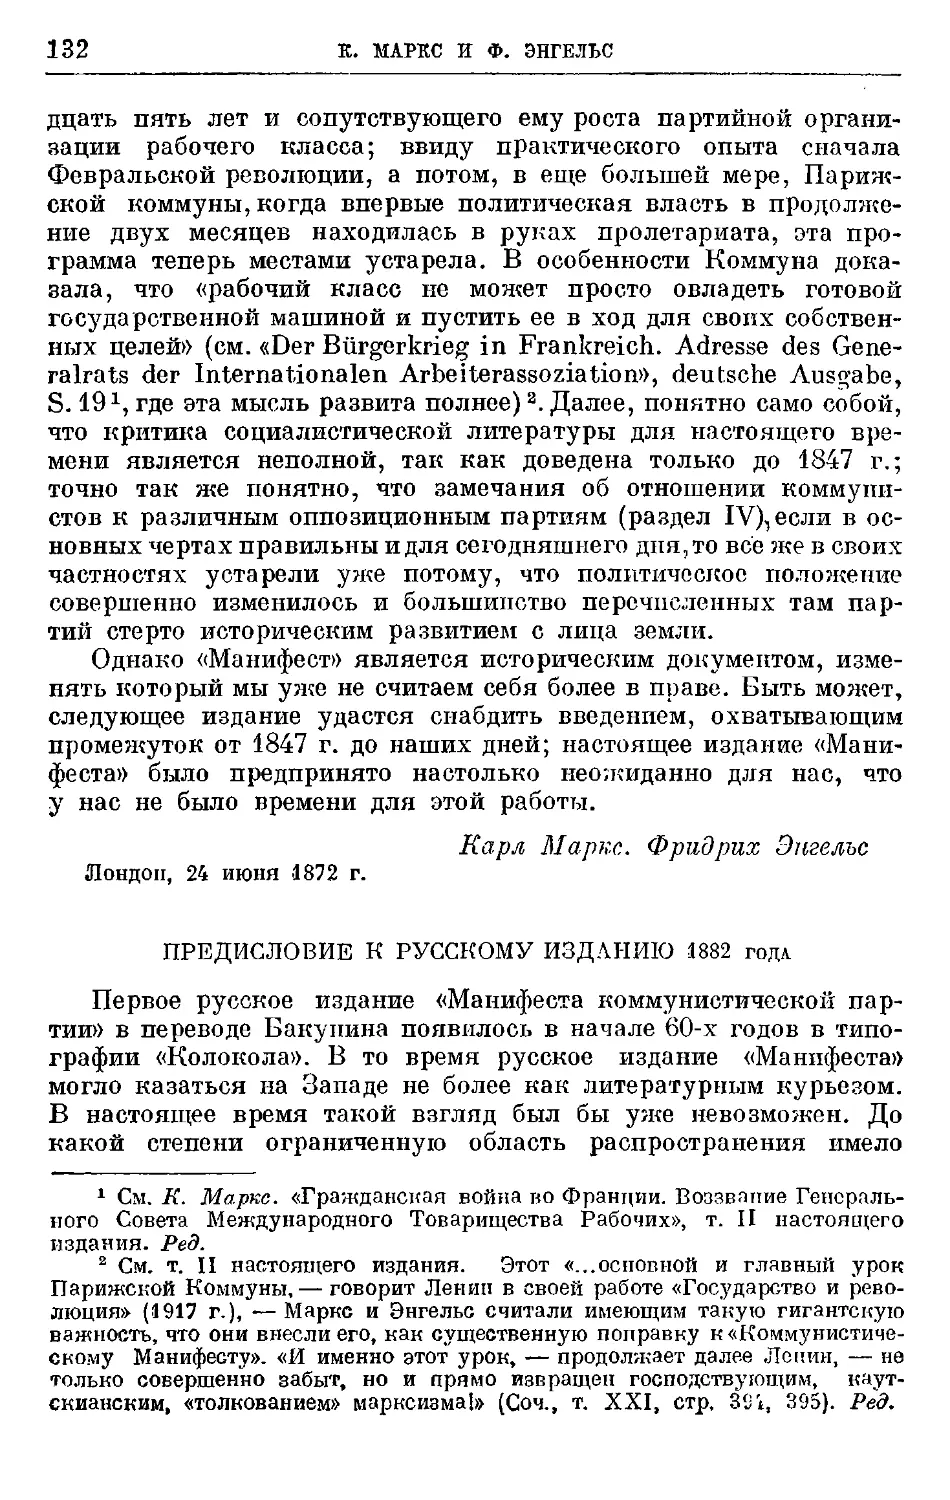 Предисловие к русскому изданию 1882 года